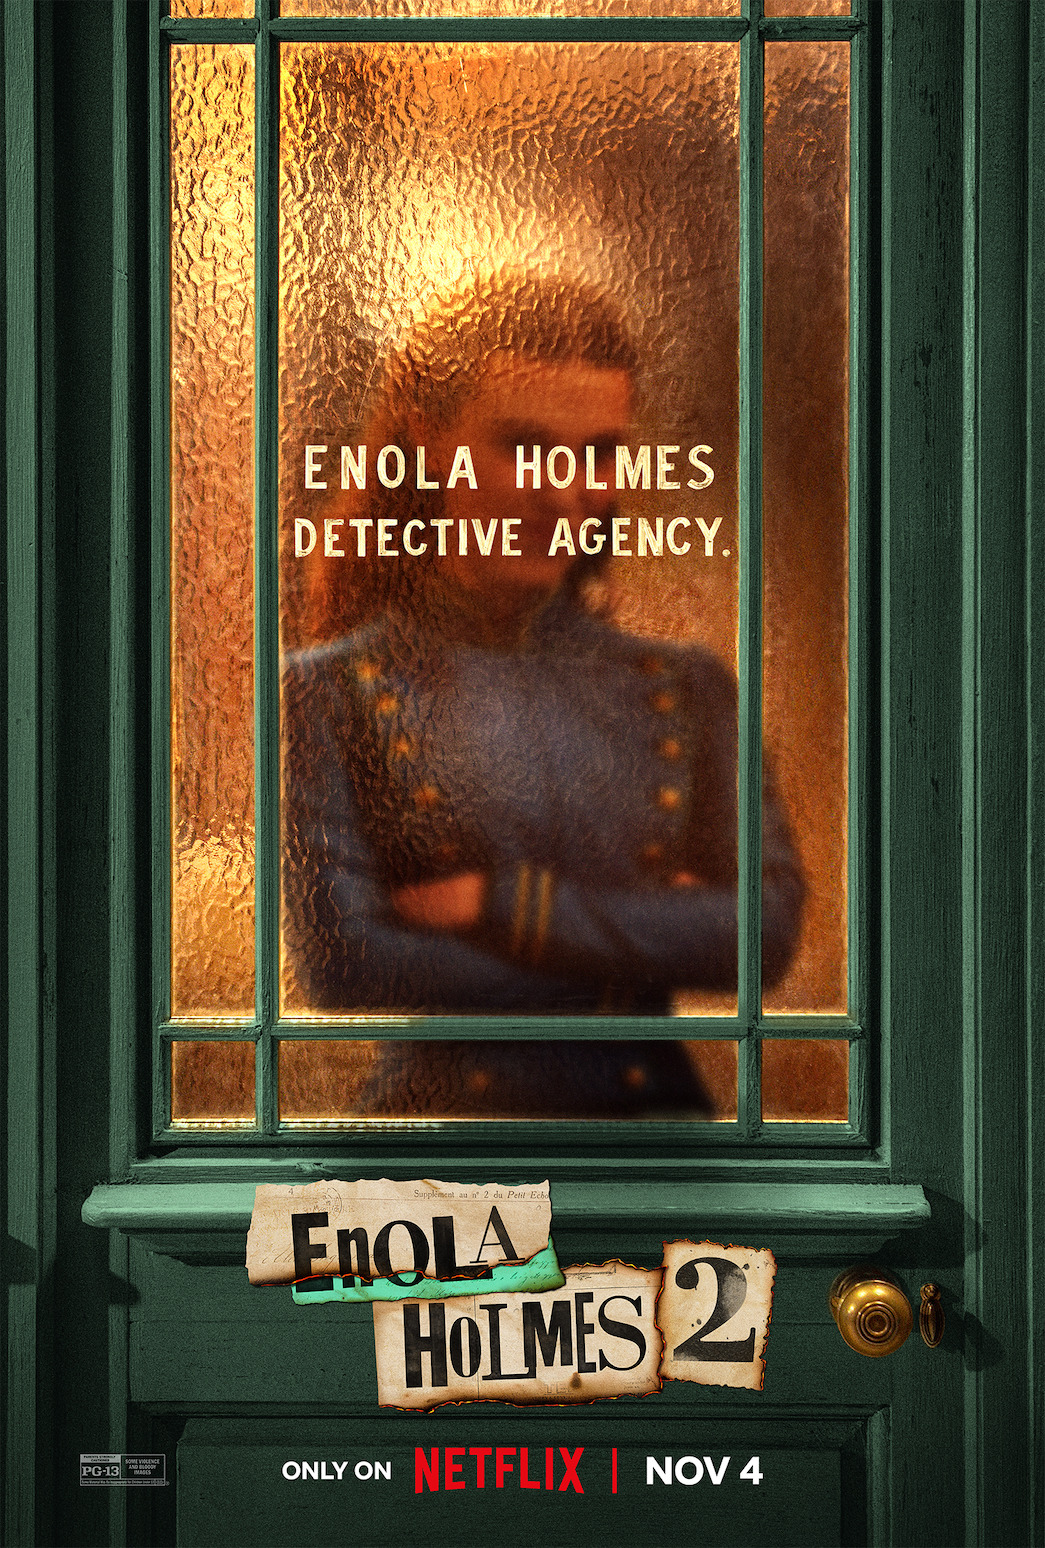 Enola Holmes 2 Trailer & Poster